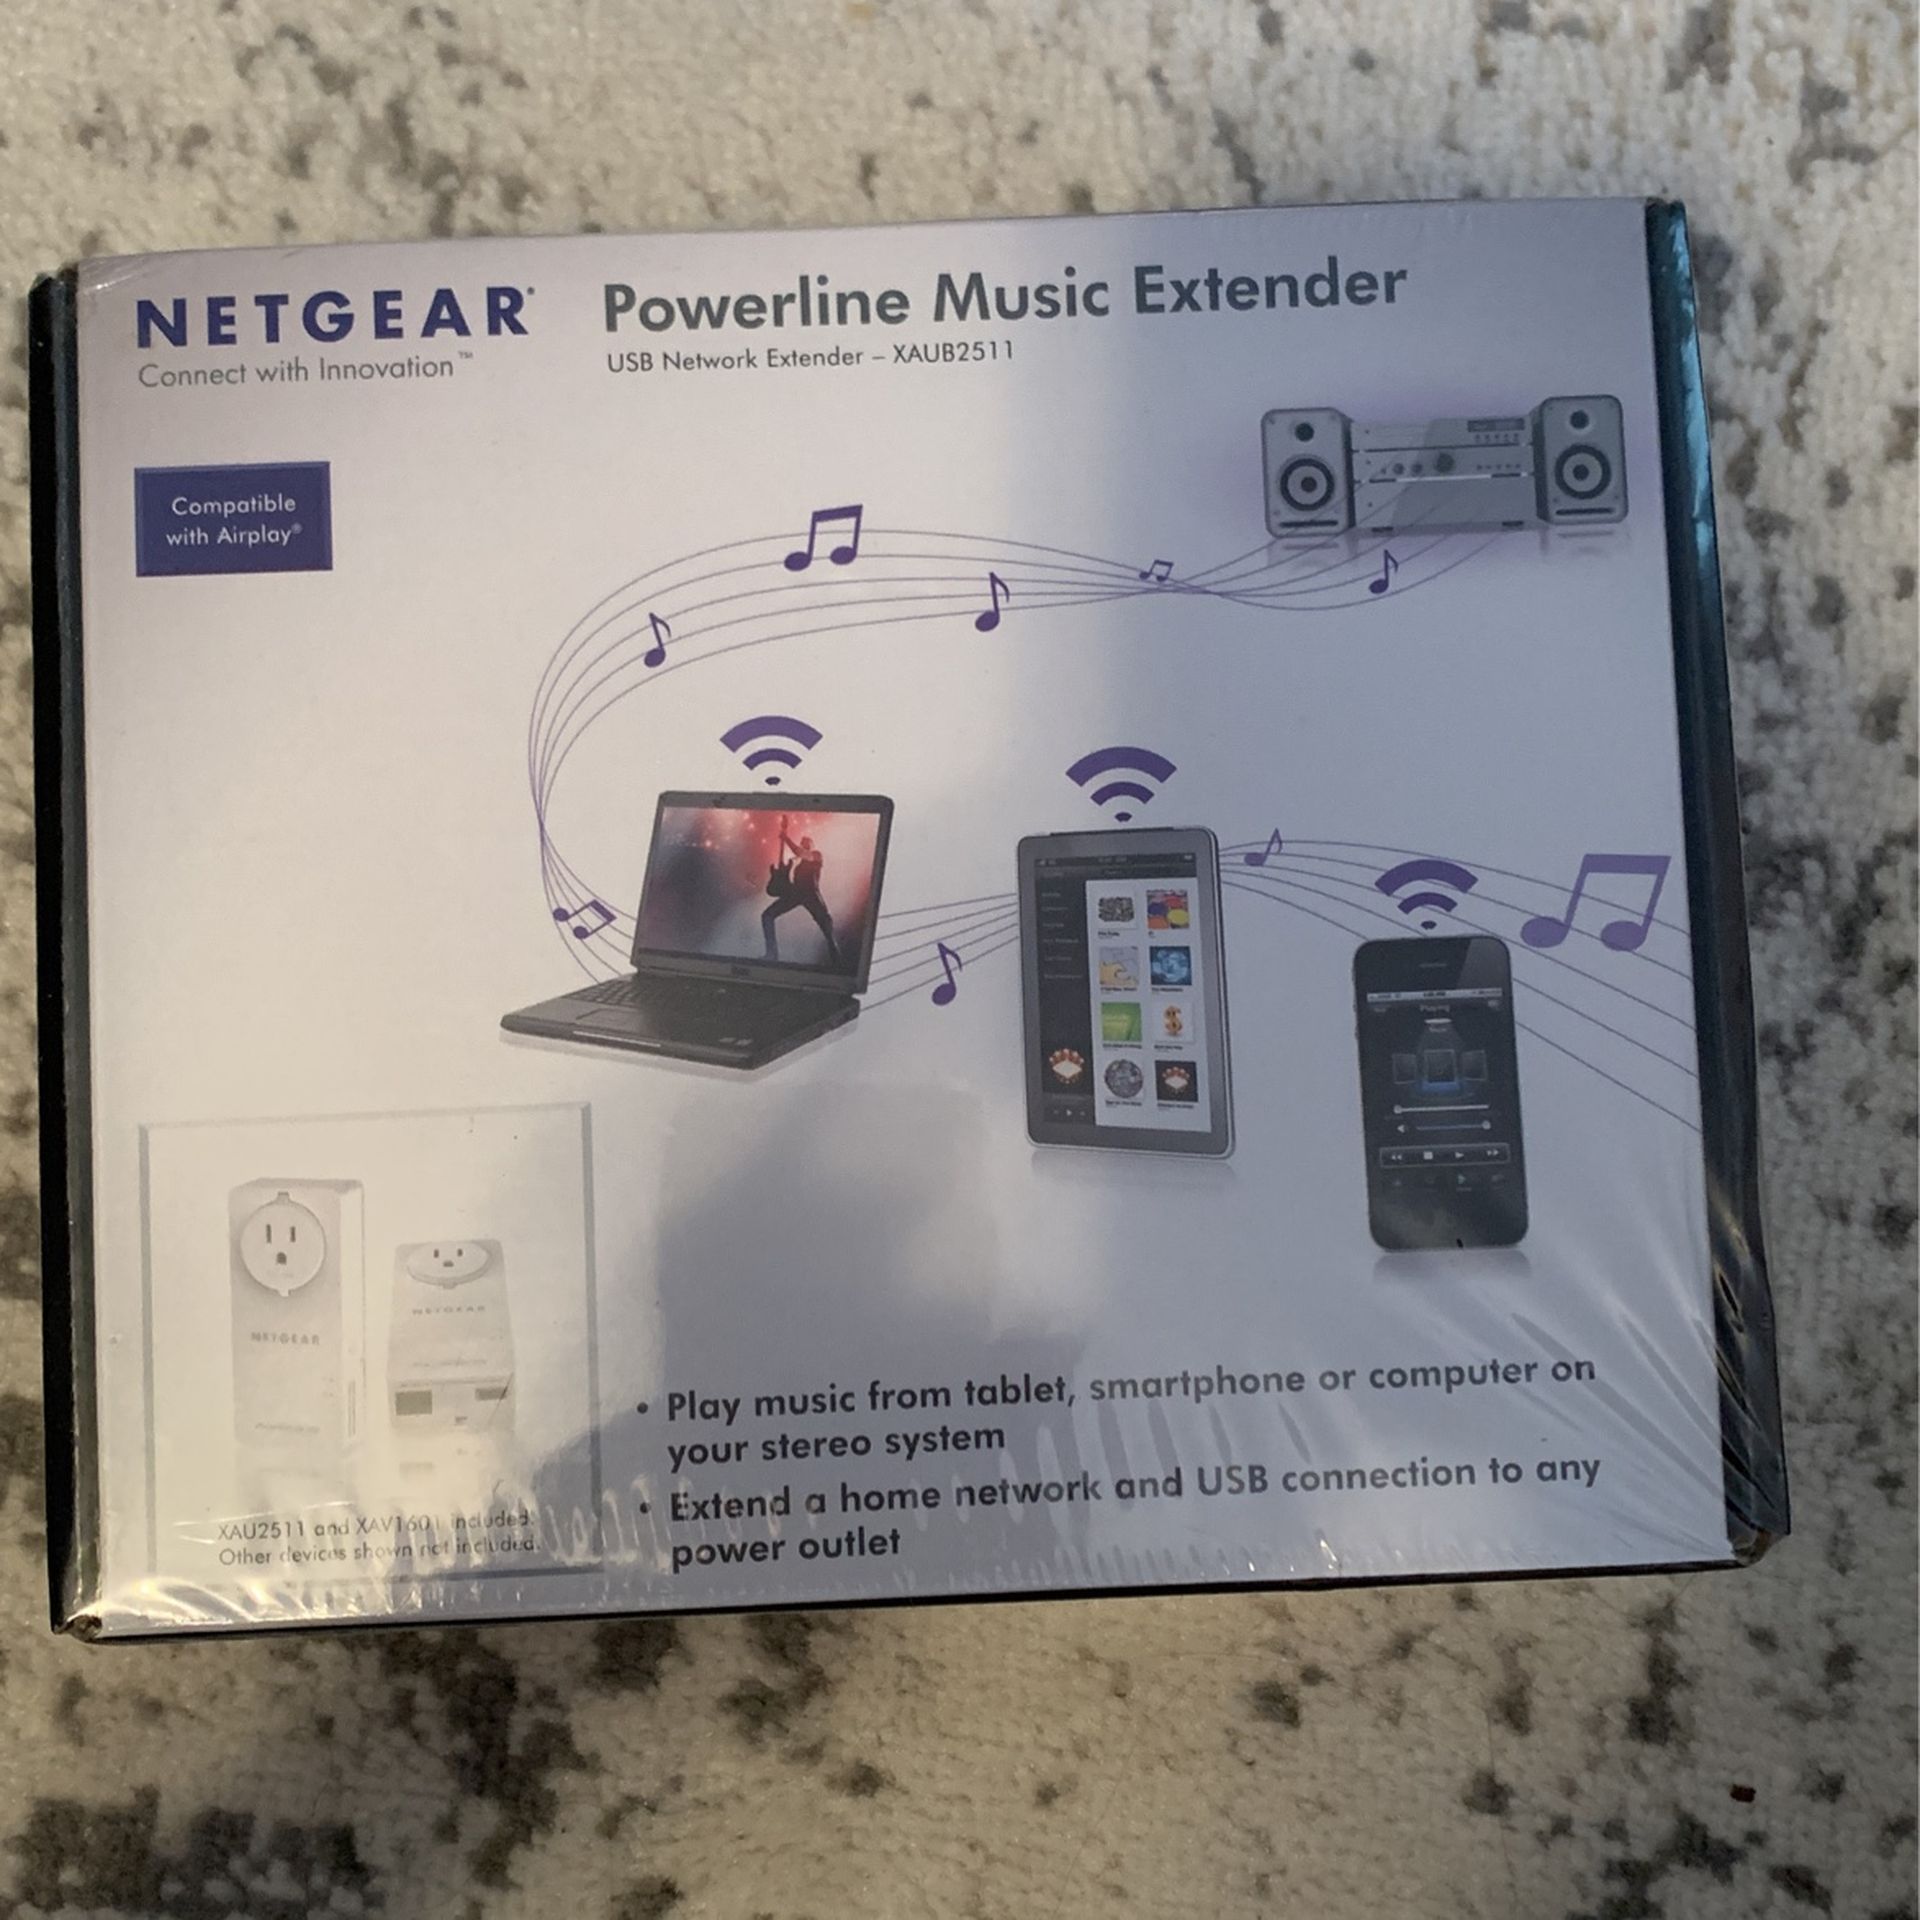 extend  Your Home Network  With  NETGEAR Power line Music Extender